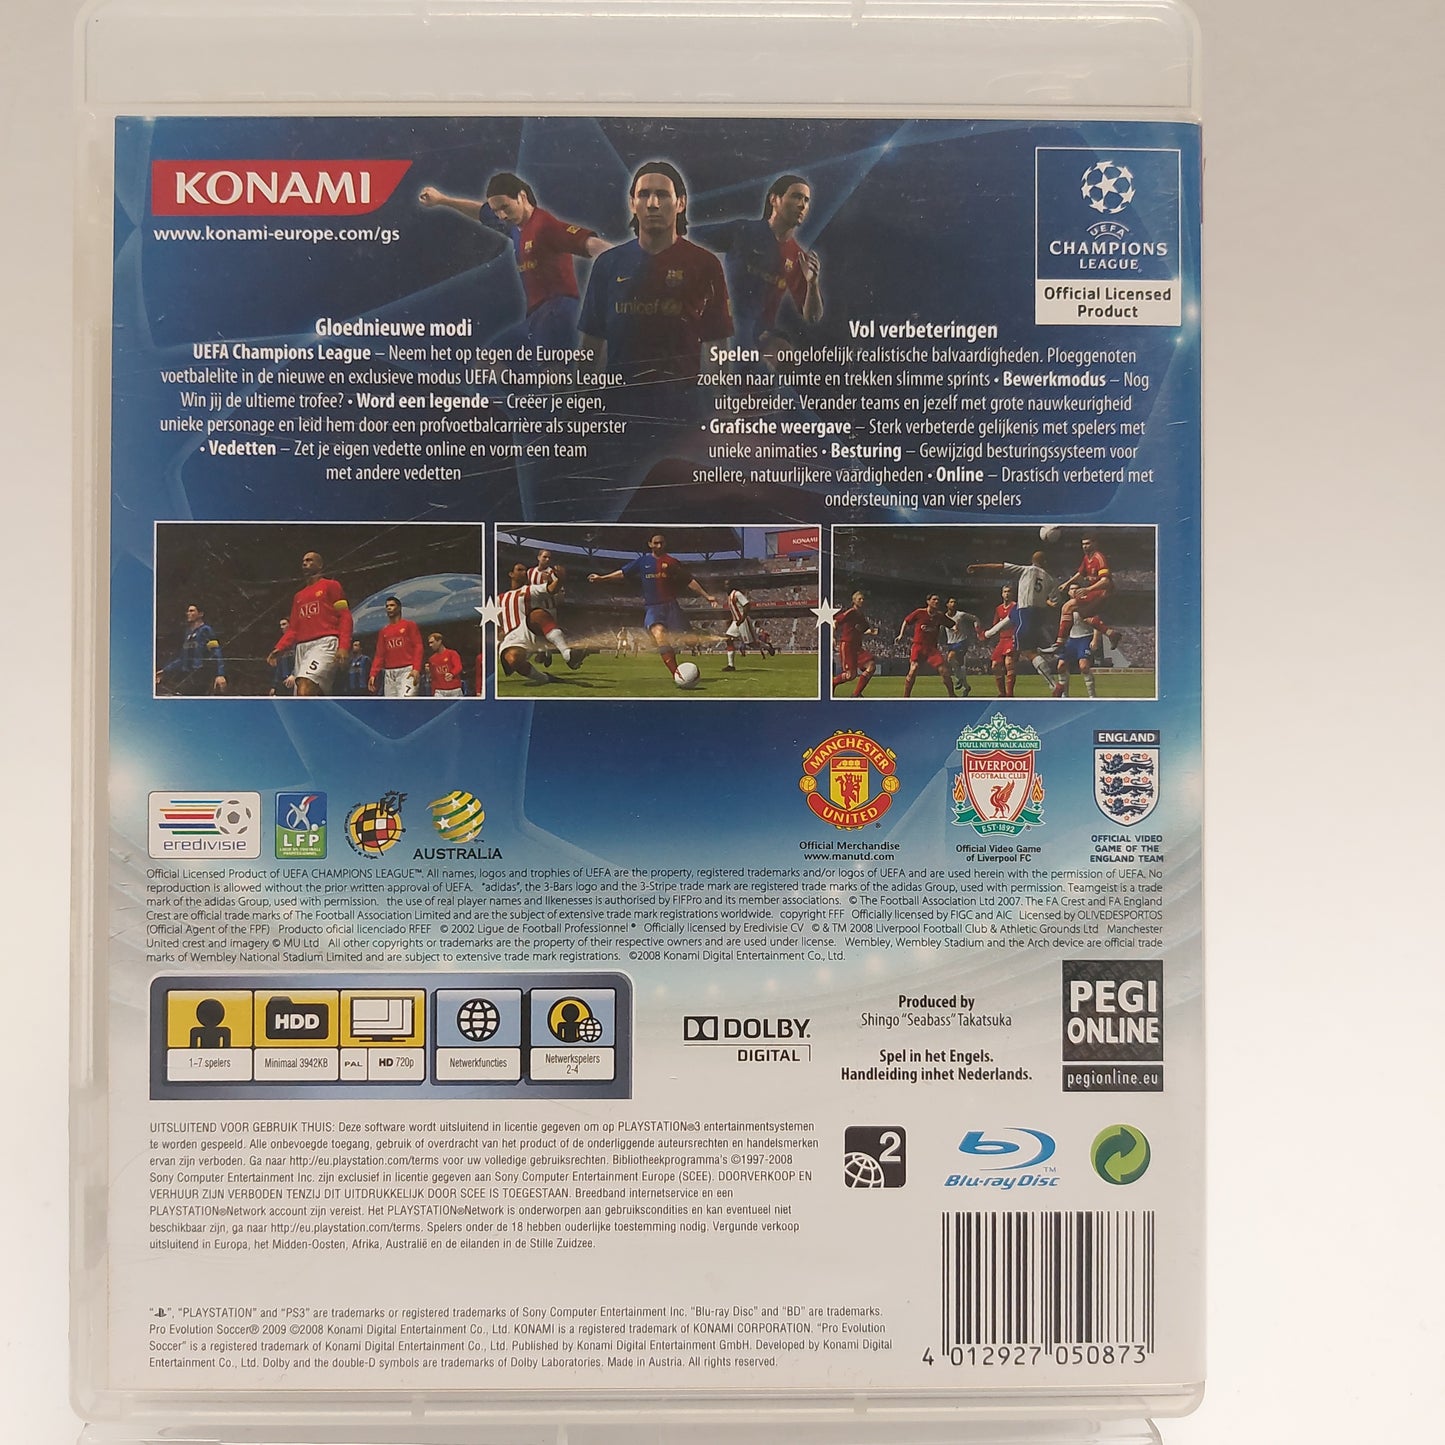 Pro Evolution Soccer 2009 Playstation 3